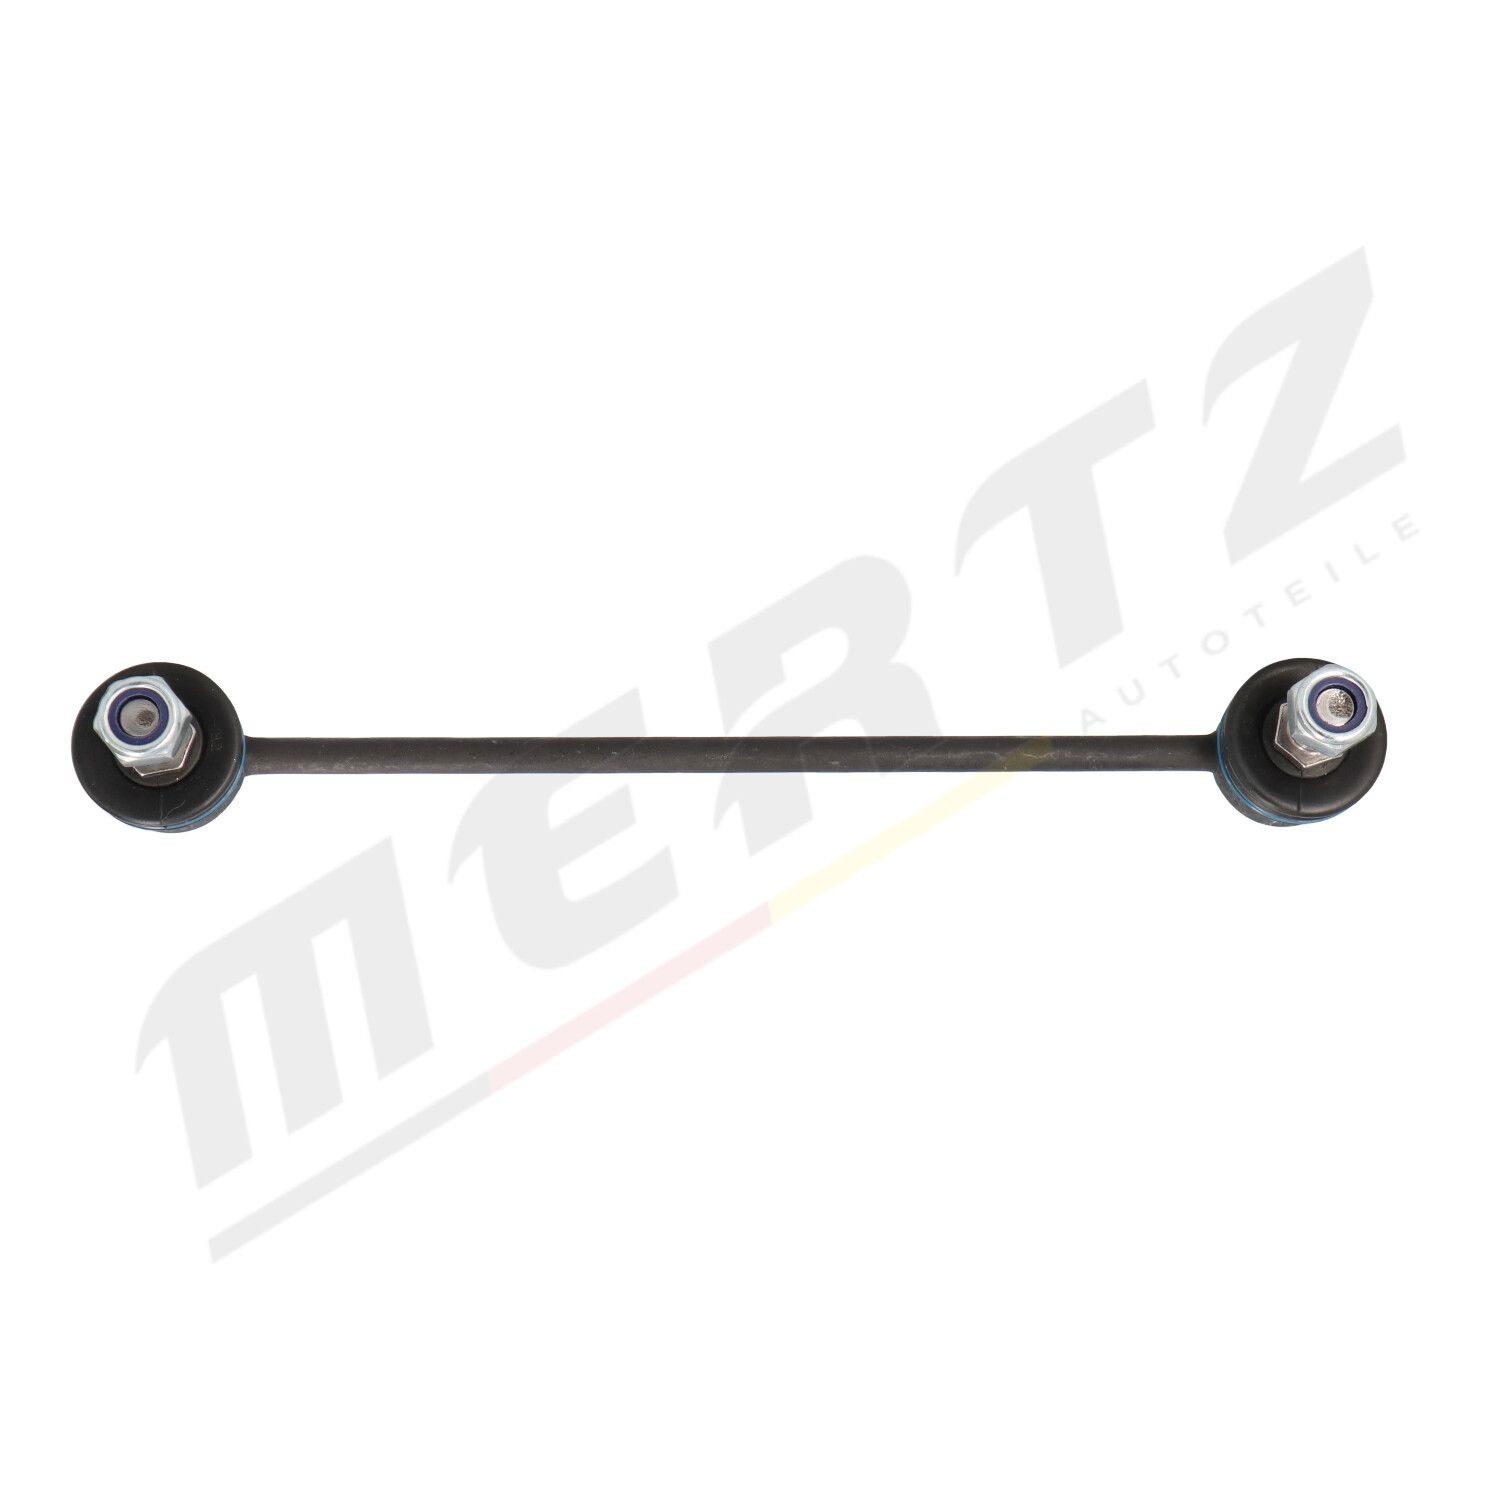 MERTZ Rear Axle Left, Rear Axle Right, 246mm, M10x1,25 , with nut, Metal Length: 246mm Drop link M-S1429 buy